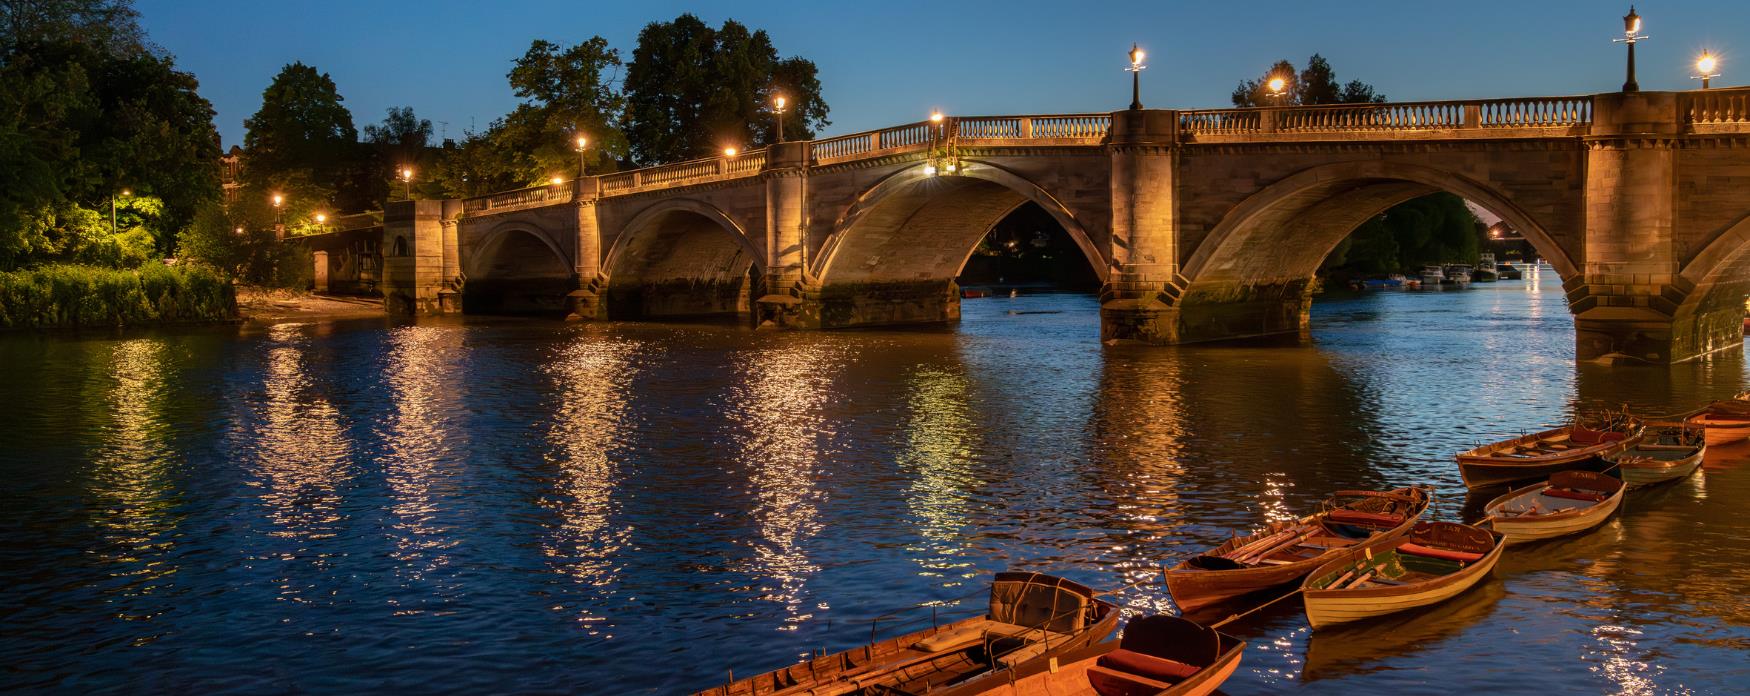 Richmond Riverside at night time